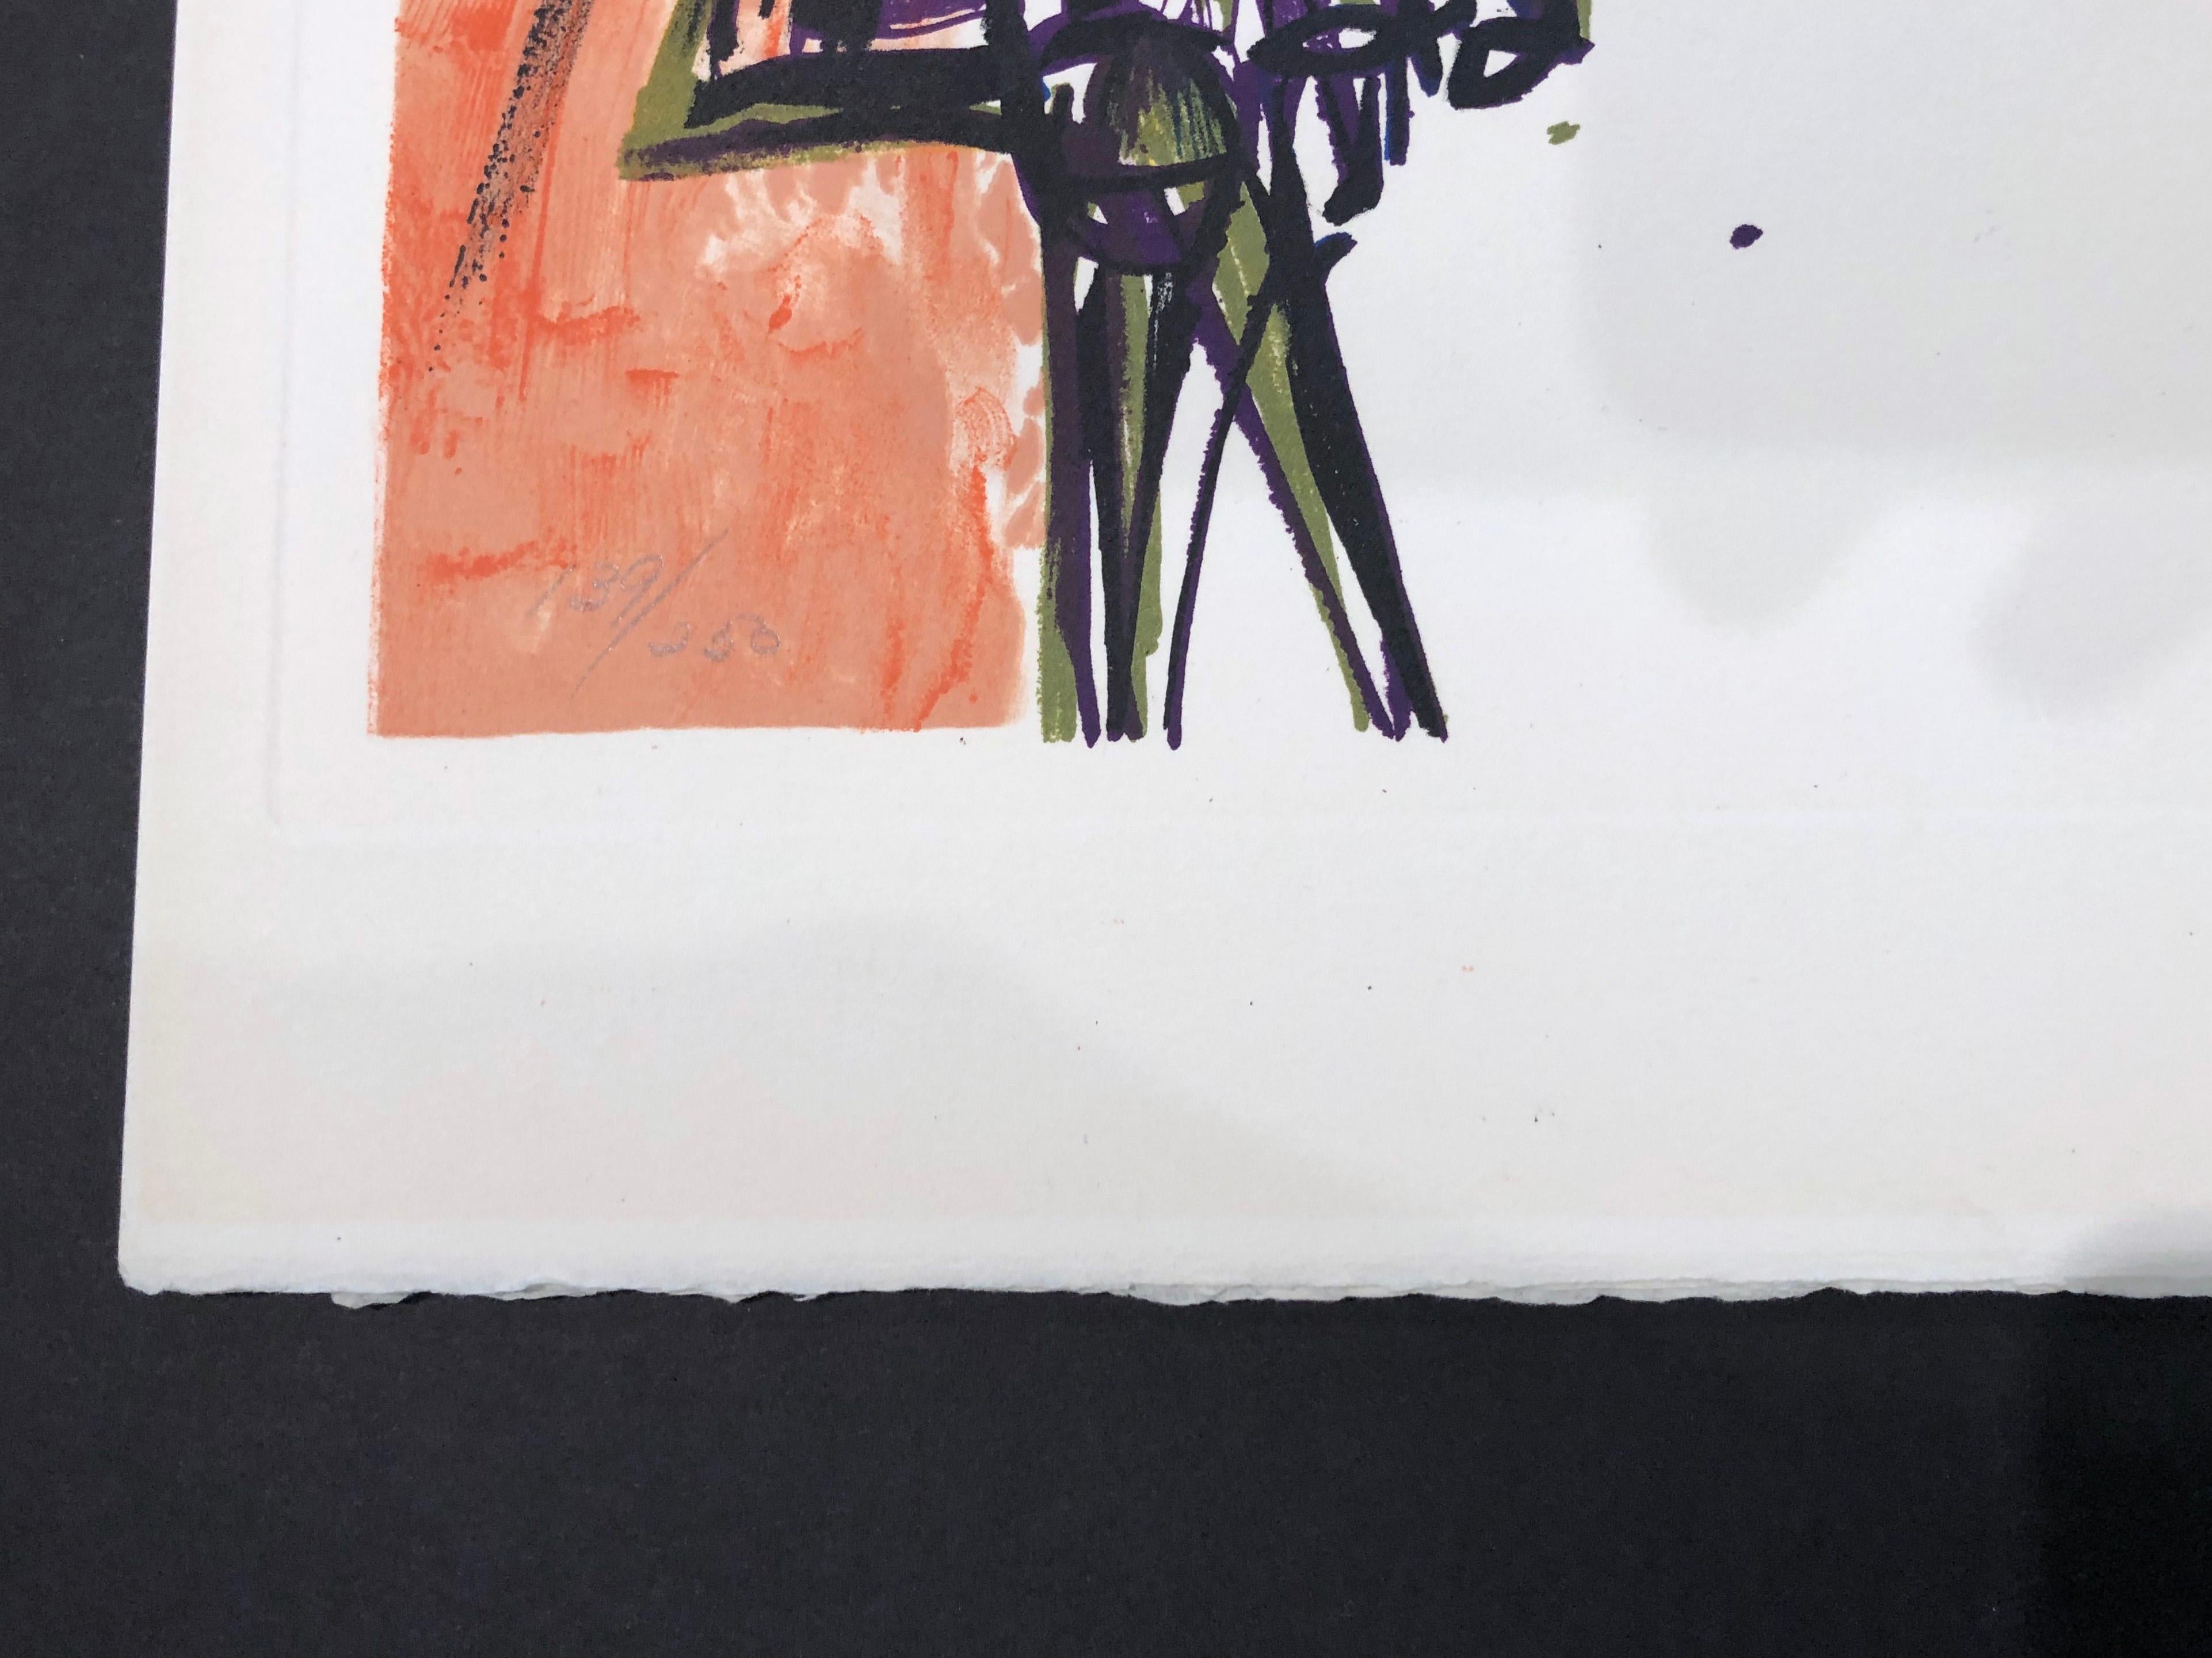 Salvador Dali Intra-Uterine Paradisiac Locomotion
Artist: Salvador Dali
Medium: Lithograph on Arches paper
Title: Intra-Uterine Paradisiac Locomotion
Portfolio: Imaginations and Objects of the Future
Year: 1975
Edition: 139/250
Sheet Size: 30 3/4 x